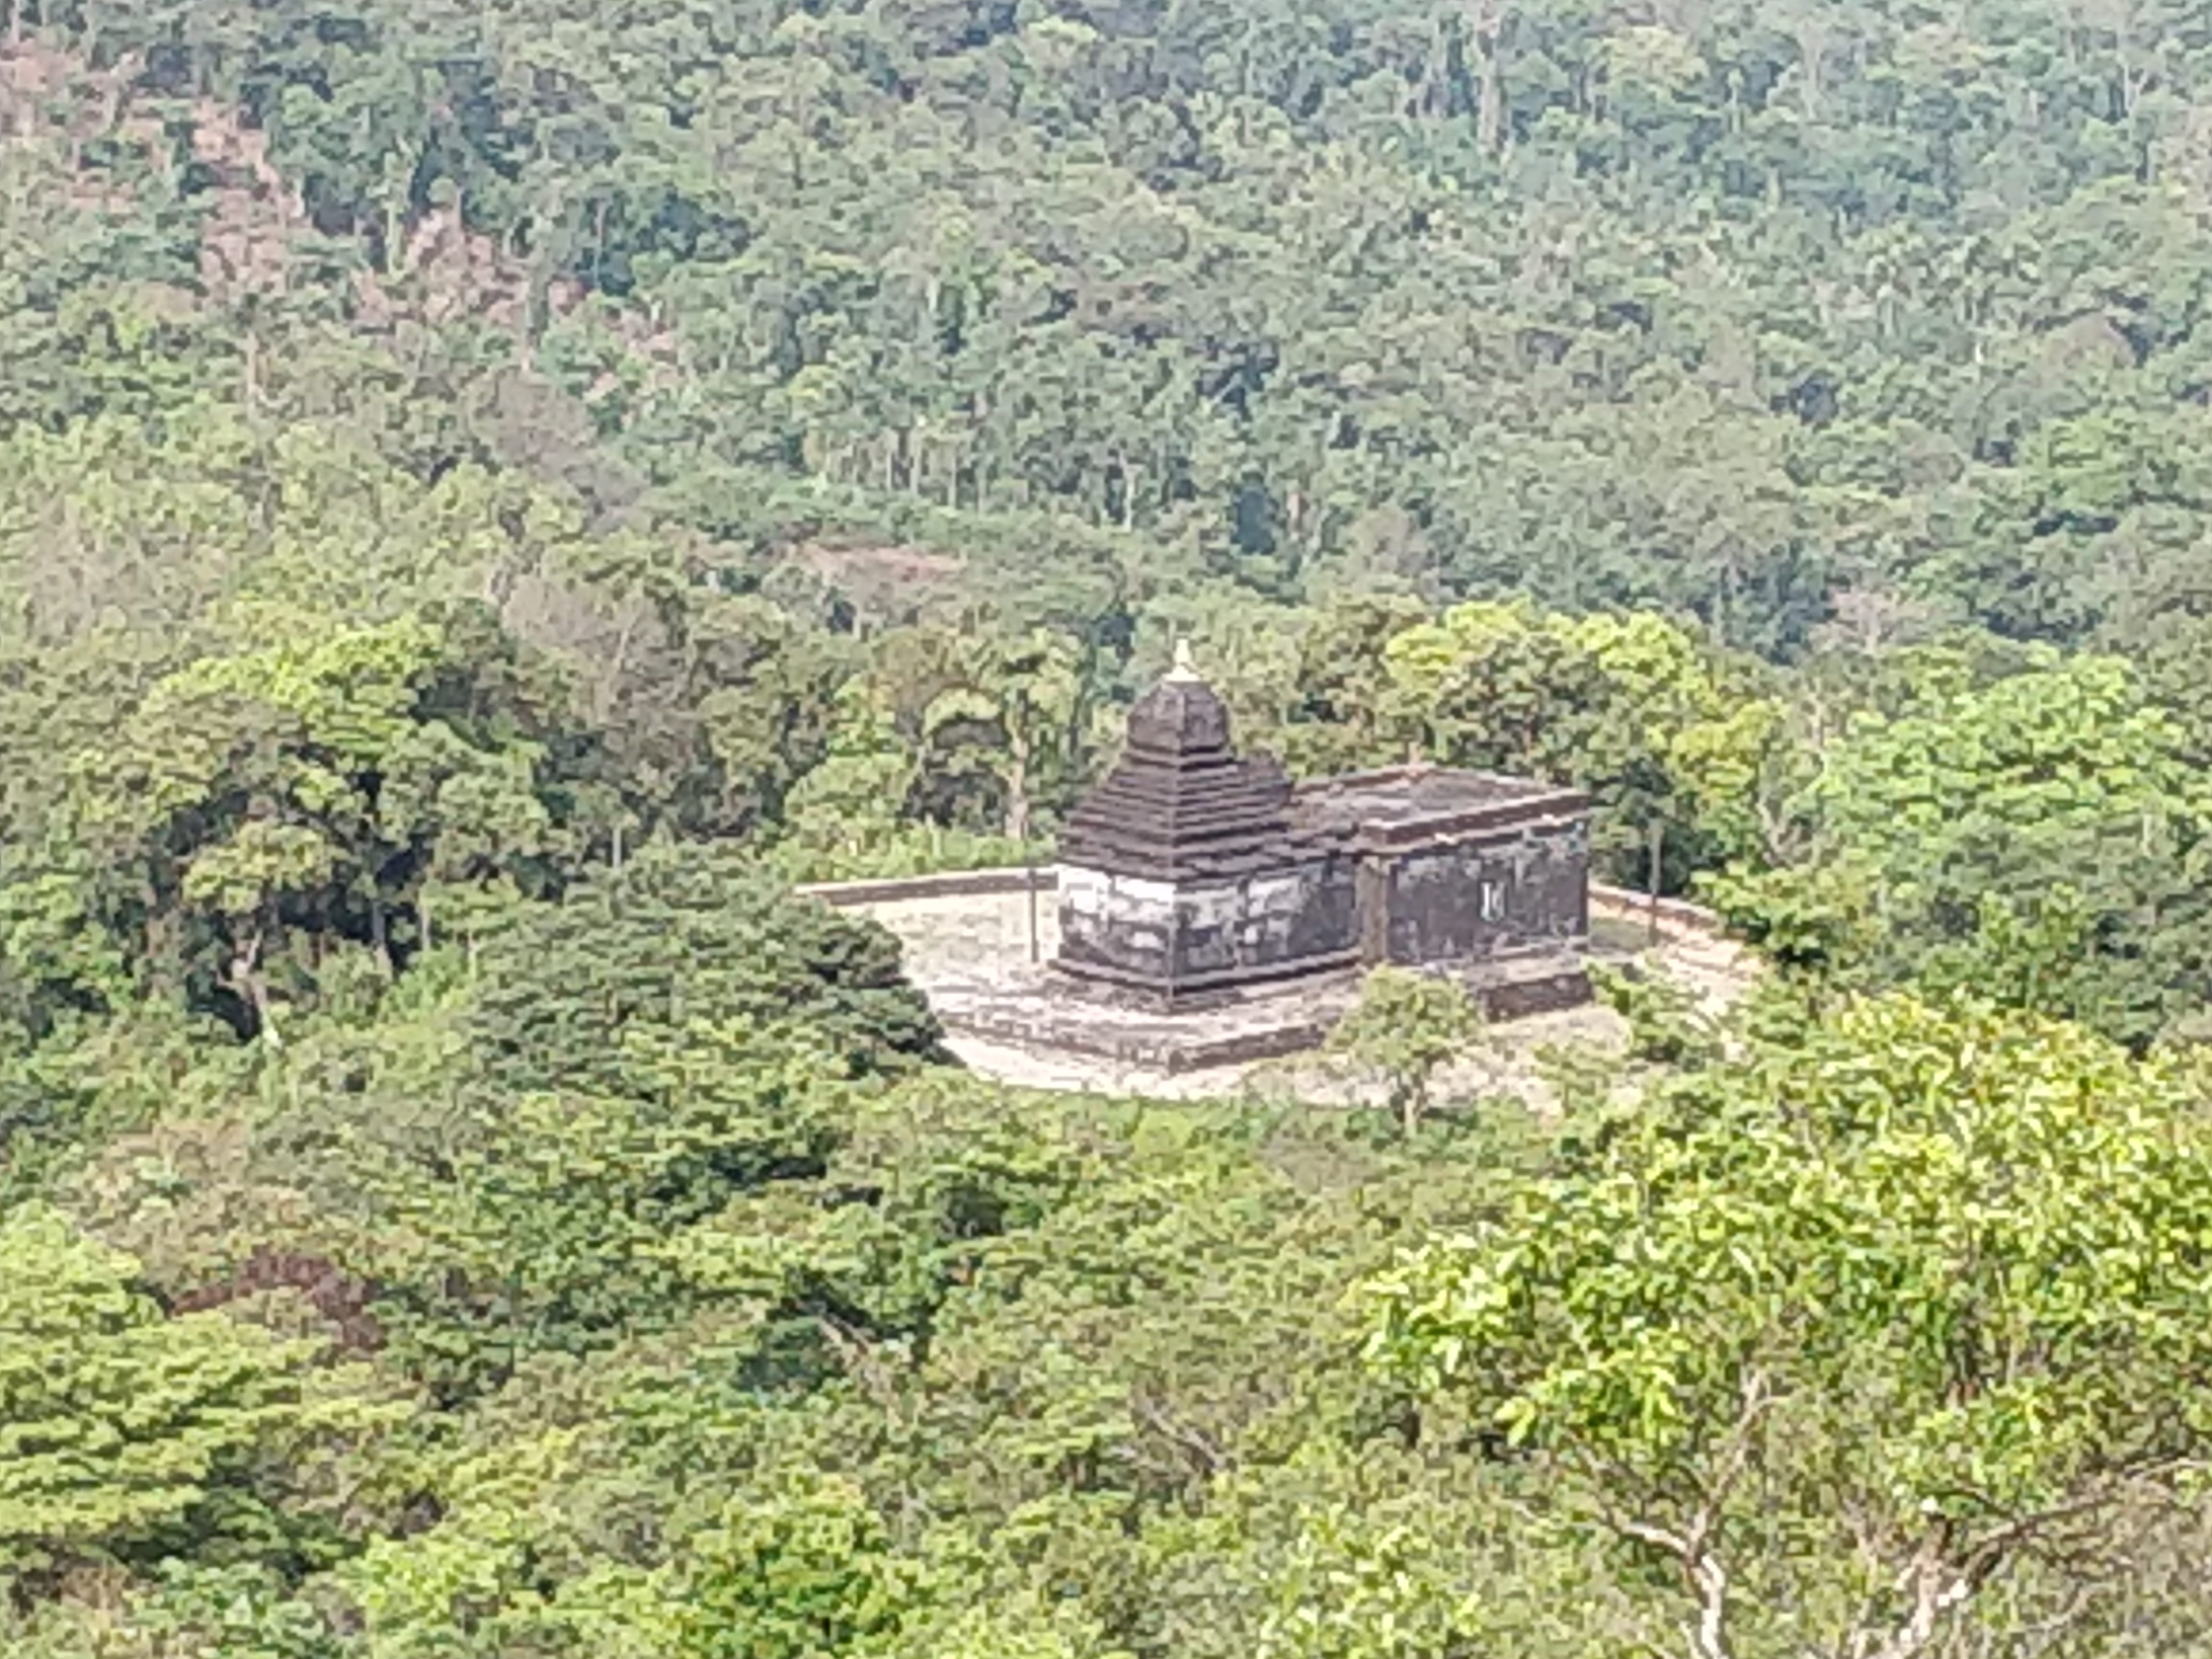 Bettada Byraweshwara temple clicked from the trek path